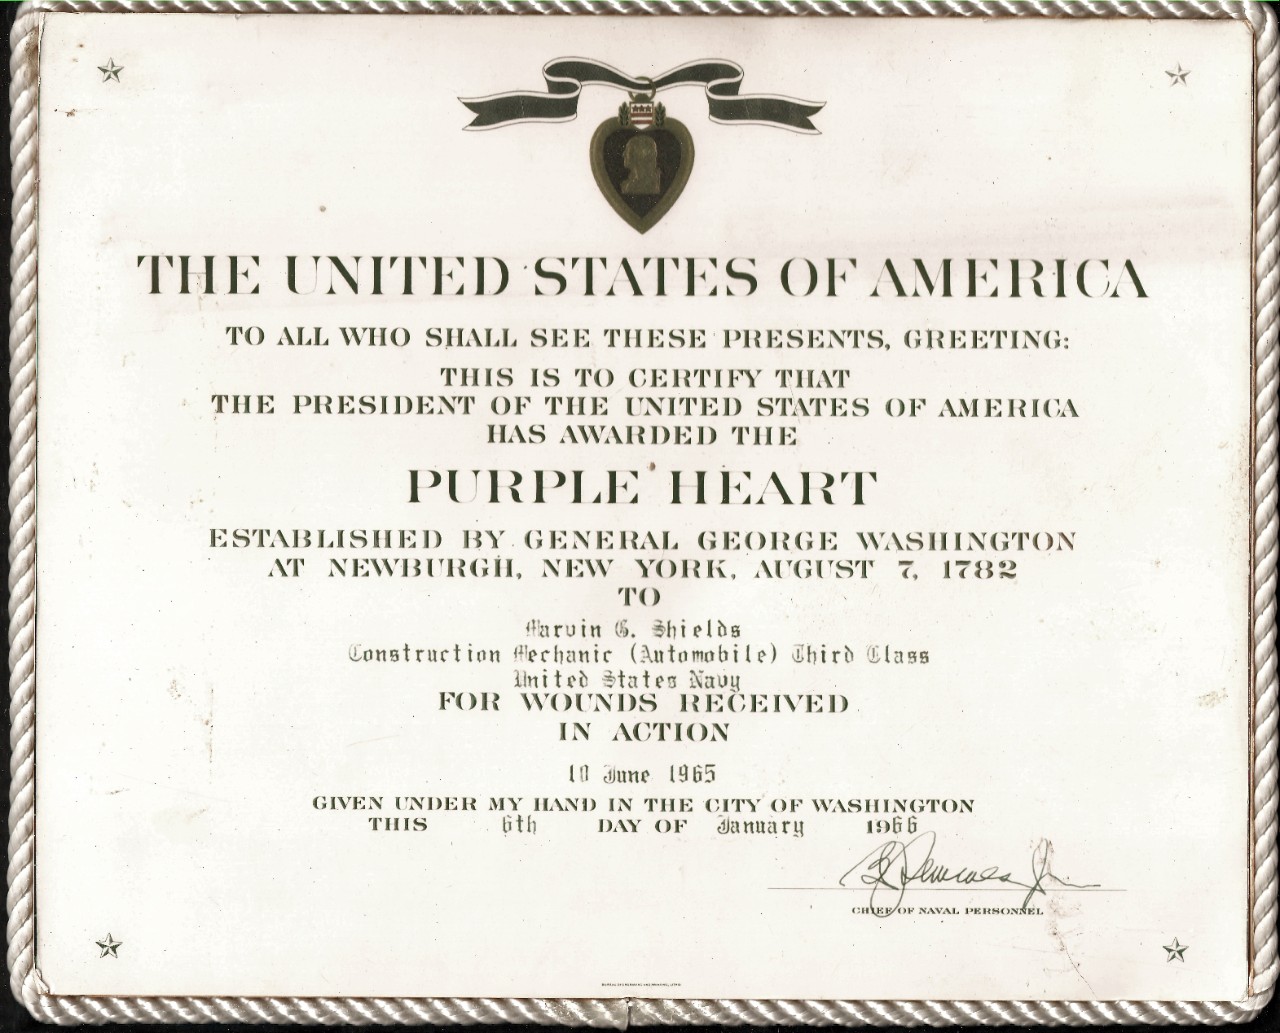 Purple Heart Award for Marvin Shields